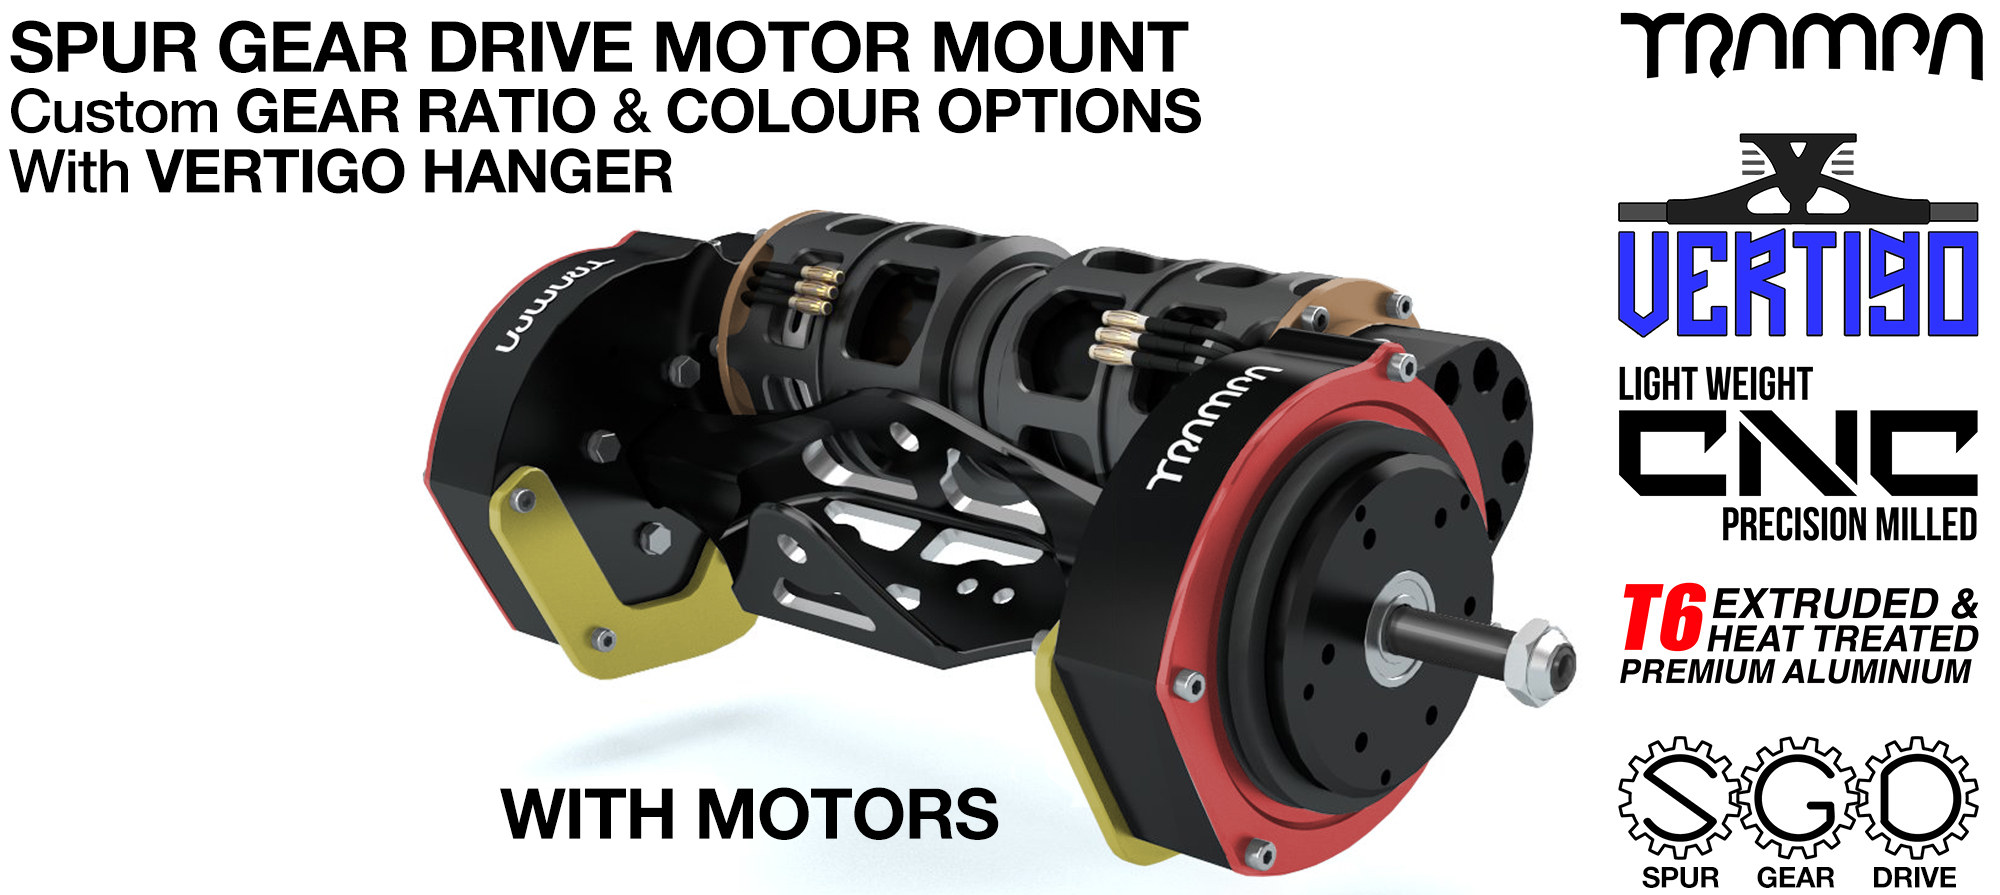 Mountainboard Spur Gear Drive TWIN Motor Mounts with Motors & VERTIGO Hanger